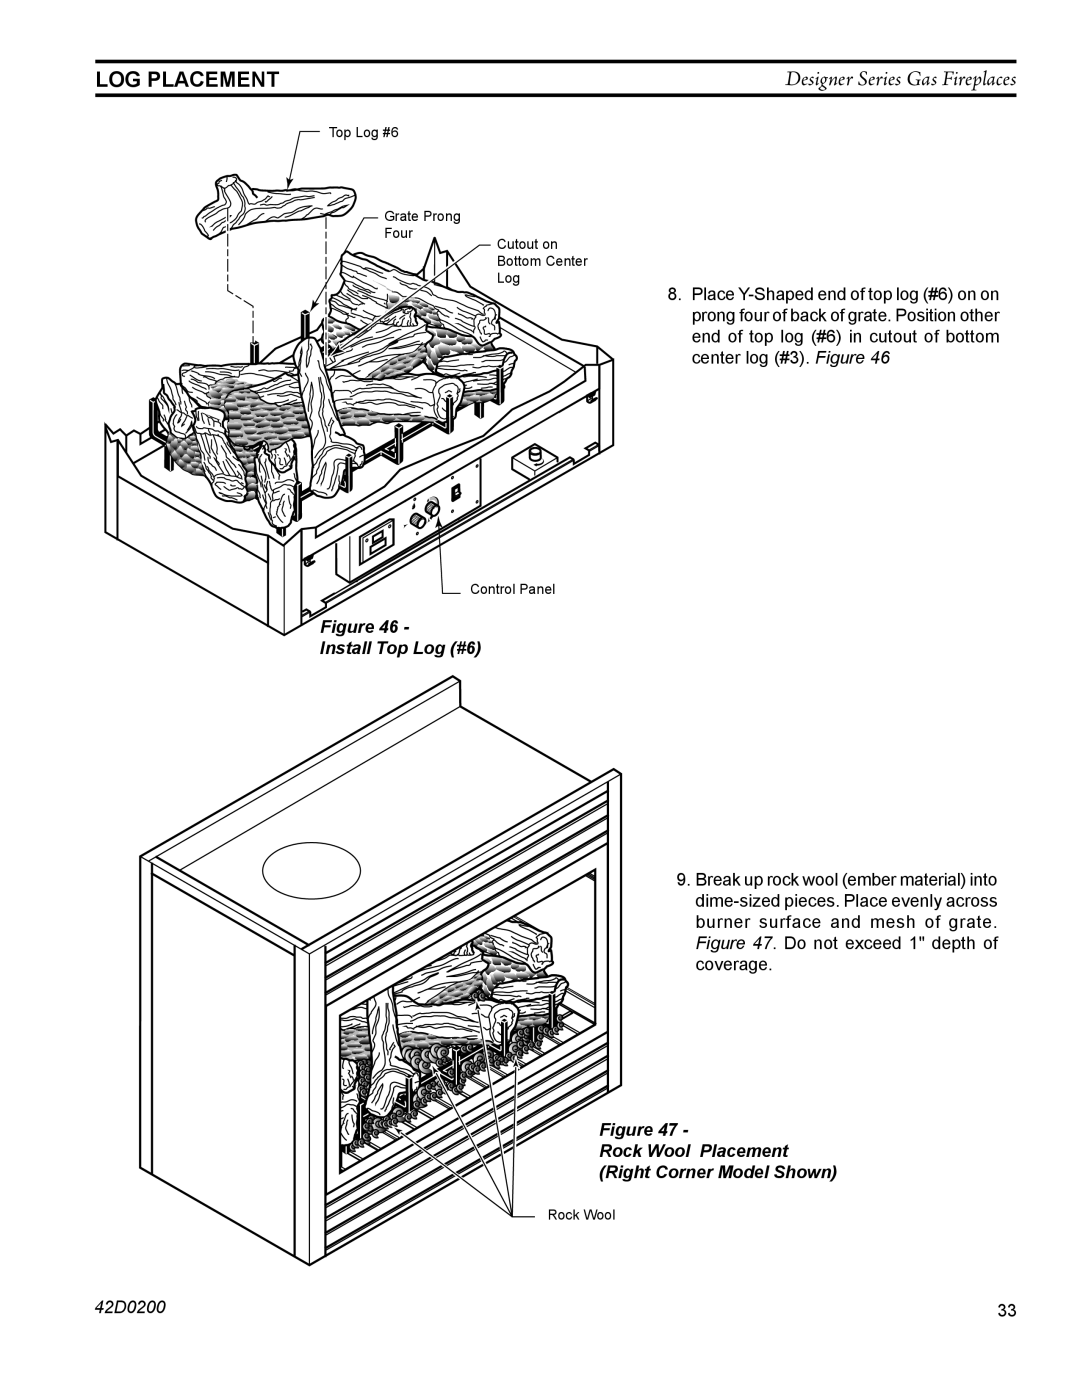 Monessen Hearth CR log placement, Designer Series Gas Fireplaces, Figure Install Top Log #6, Figure Rock Wool Placement 